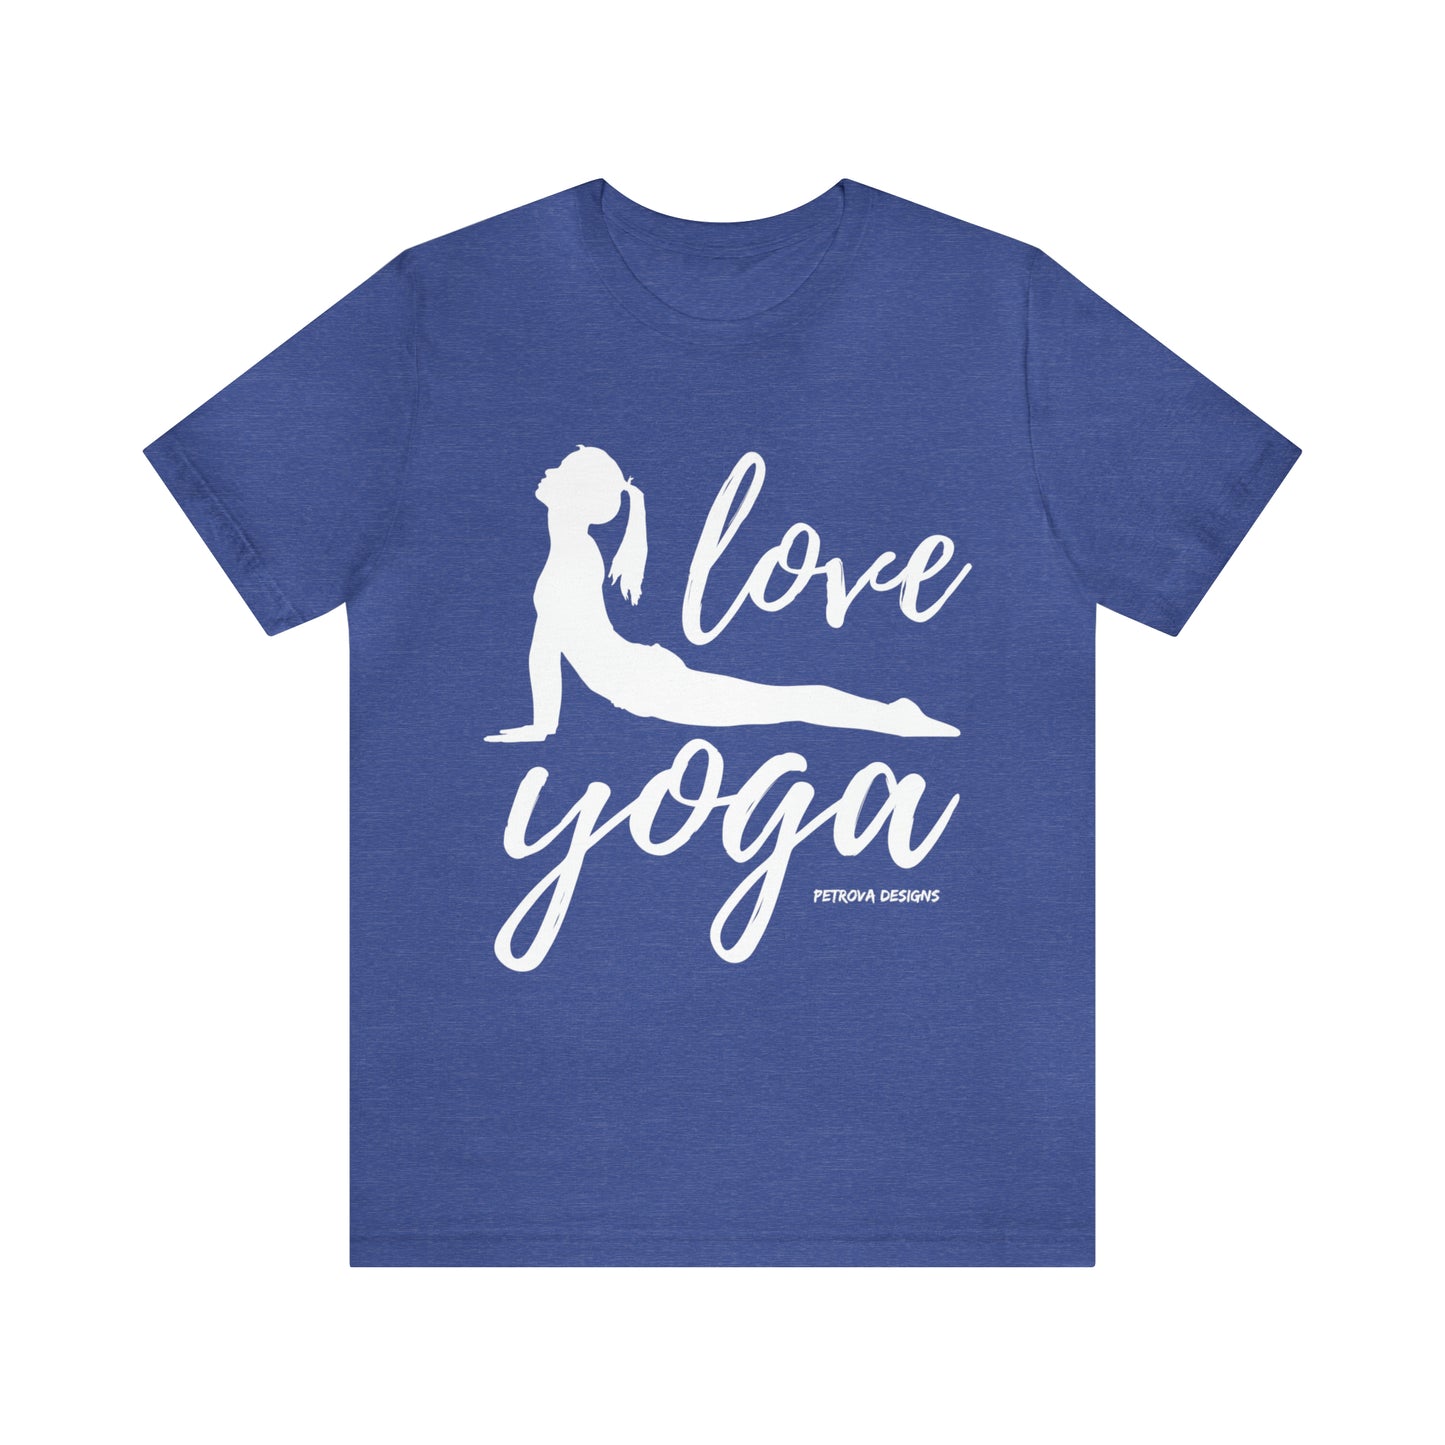 Heather True Royal T-Shirt Tshirt Design Gift for Friend and Family Short Sleeved Shirt Yoga Petrova Designs